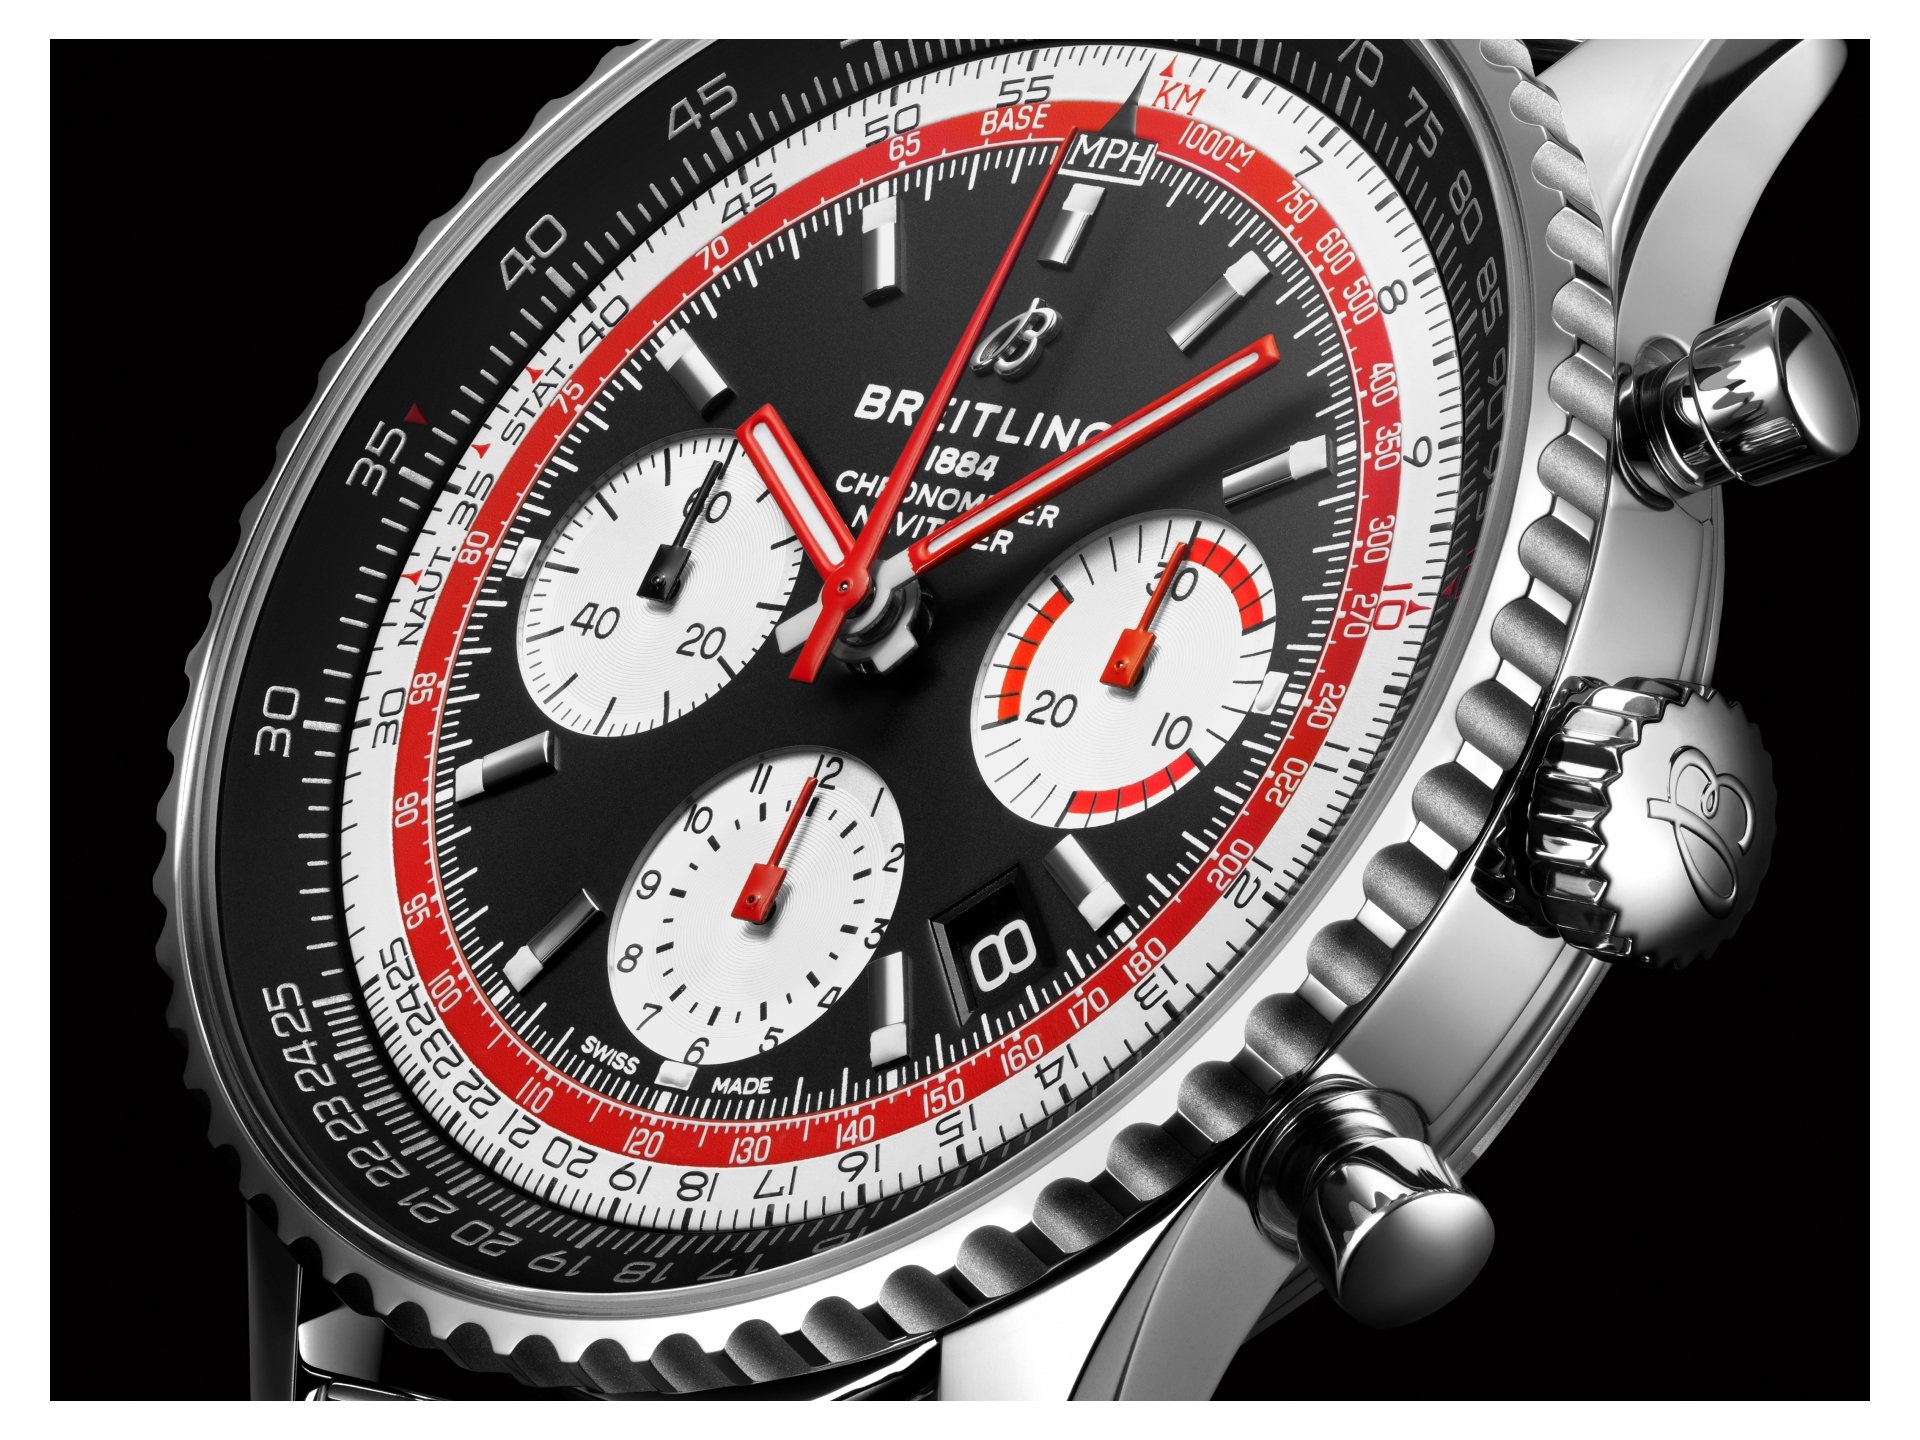 Replica Breitling Watch Straps Uk